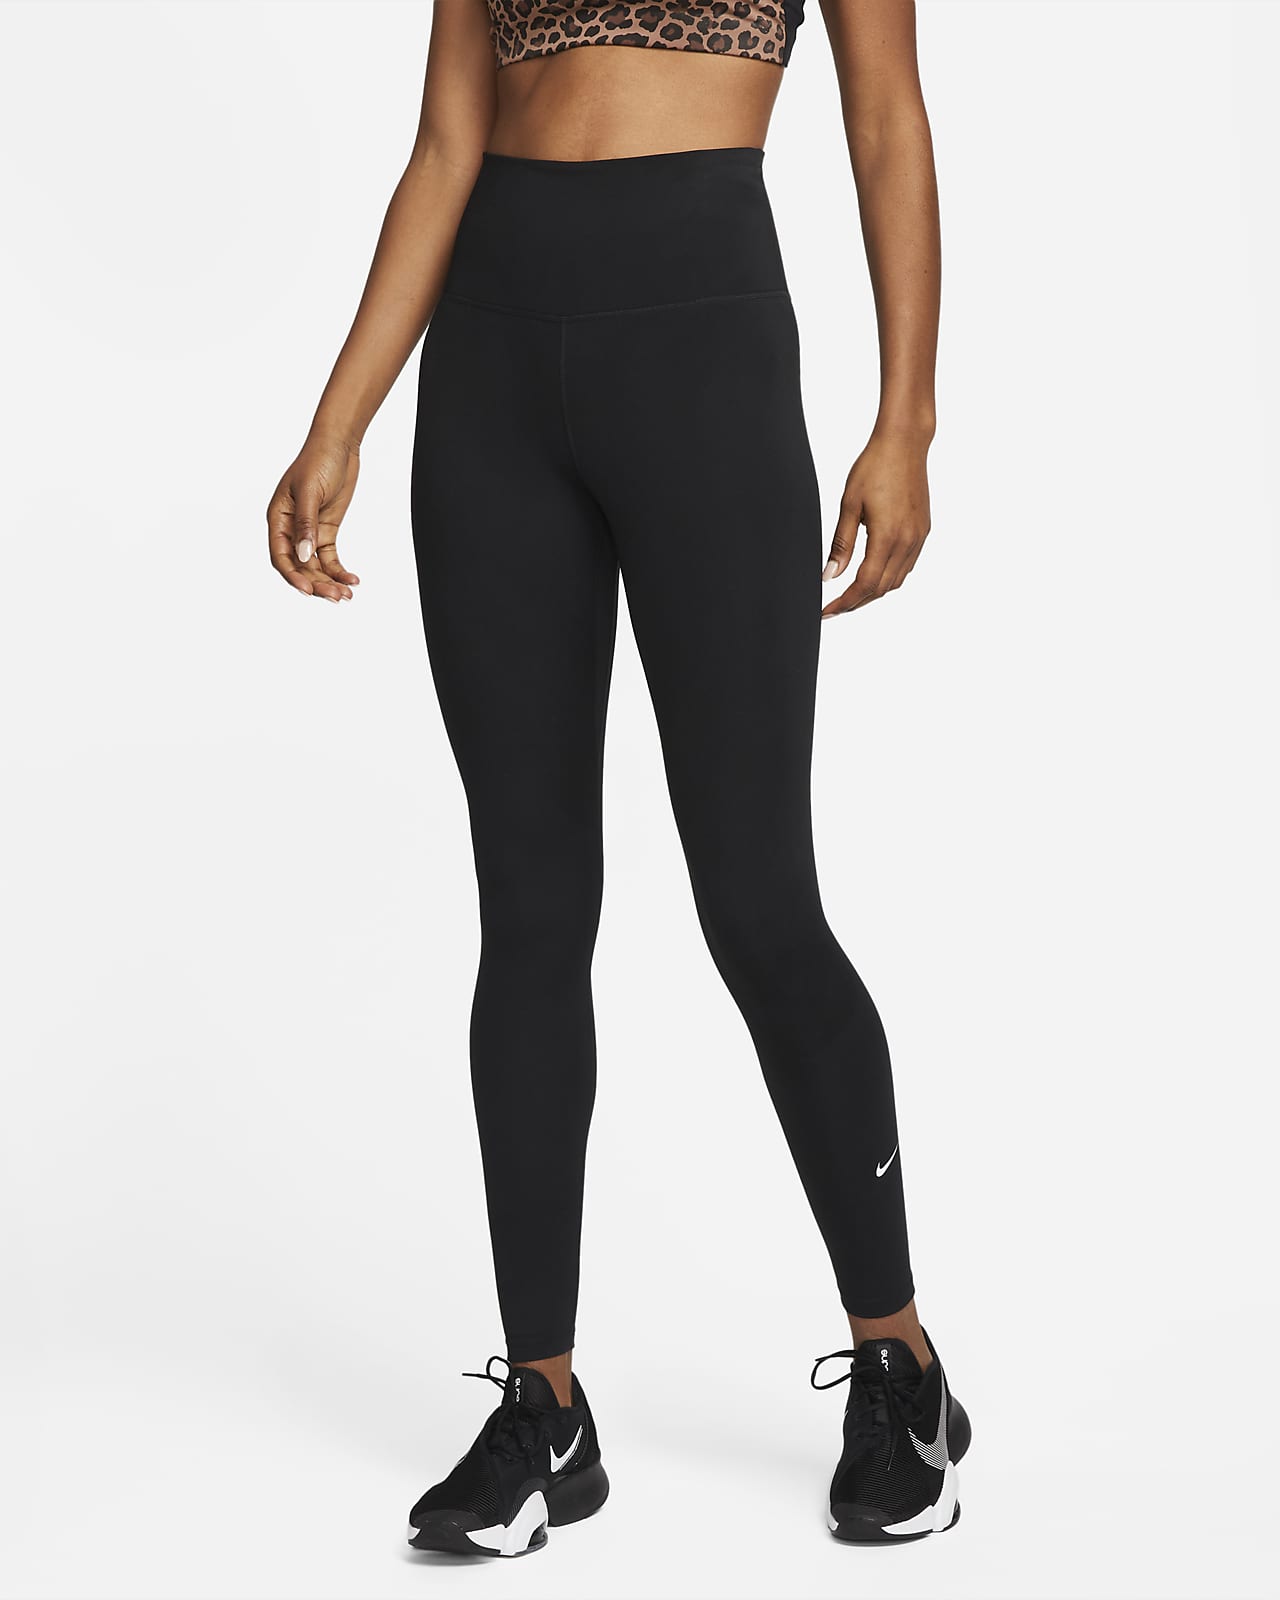 Nike One Leggings de talle alto - Mujer